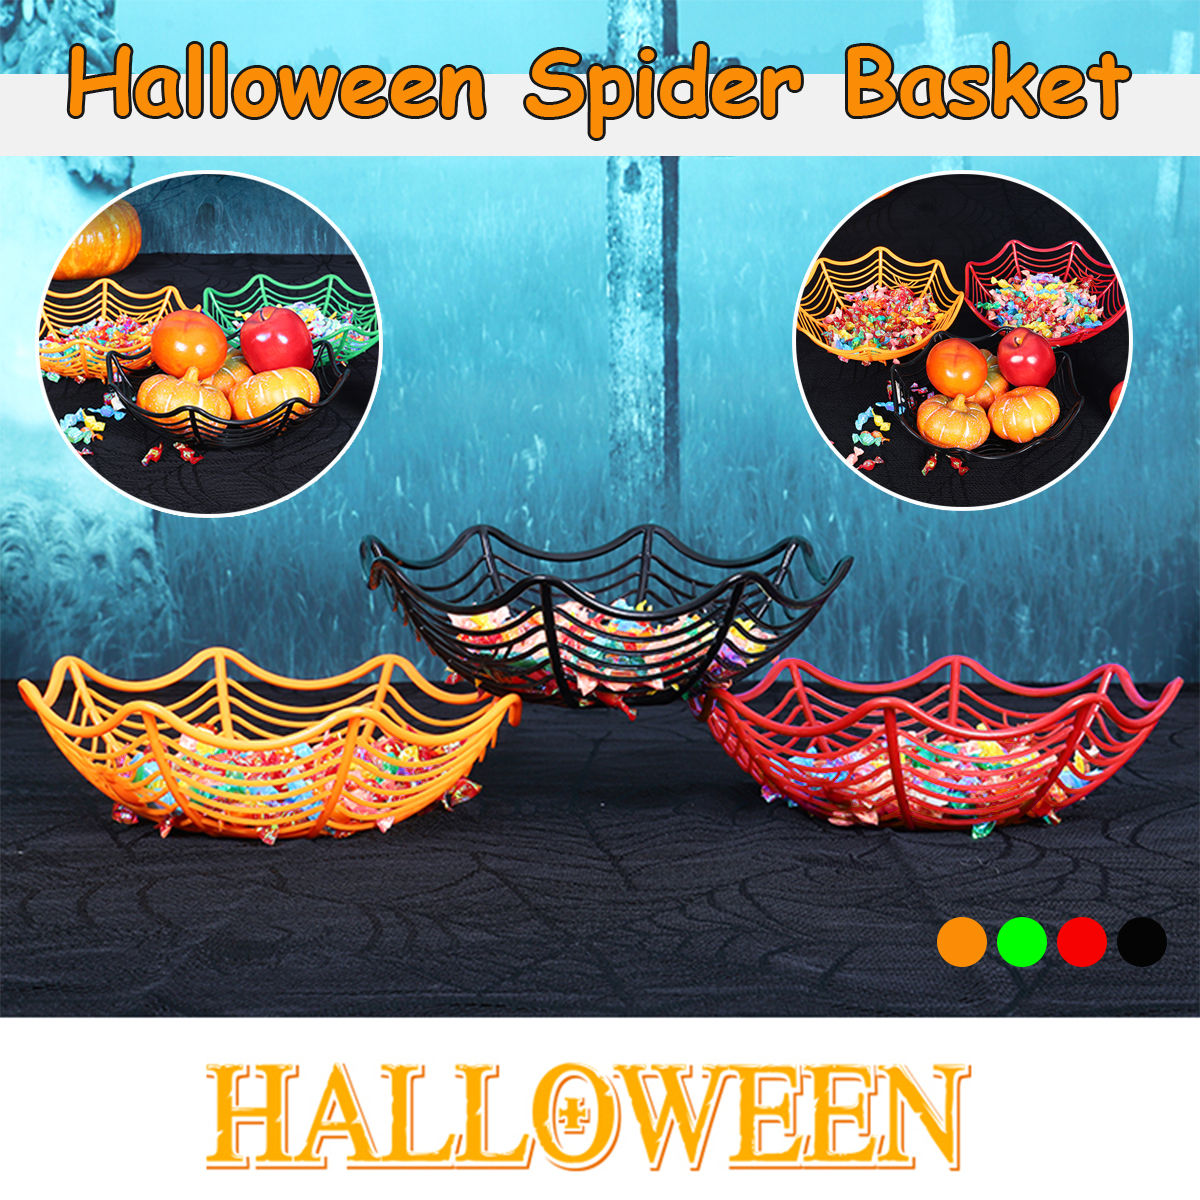 Halloween-Candy-Basket-Bowls-Spider-Web-Plastic-Bowls-for-Kids-Trick-or-Treat-Candy-Halloween-Basket-1751560-1